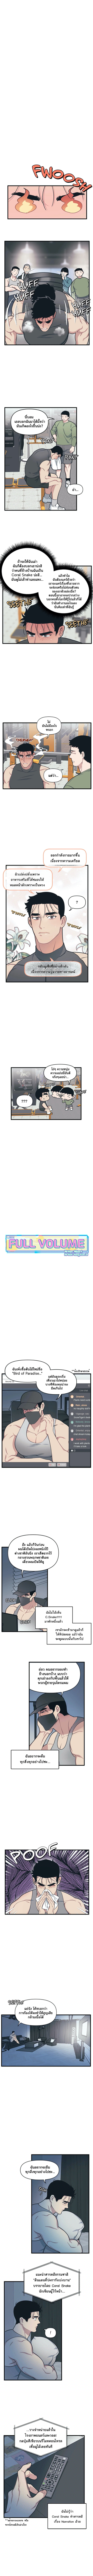 Full-Volume-9-26f7f31ead0d38ddf.jpg